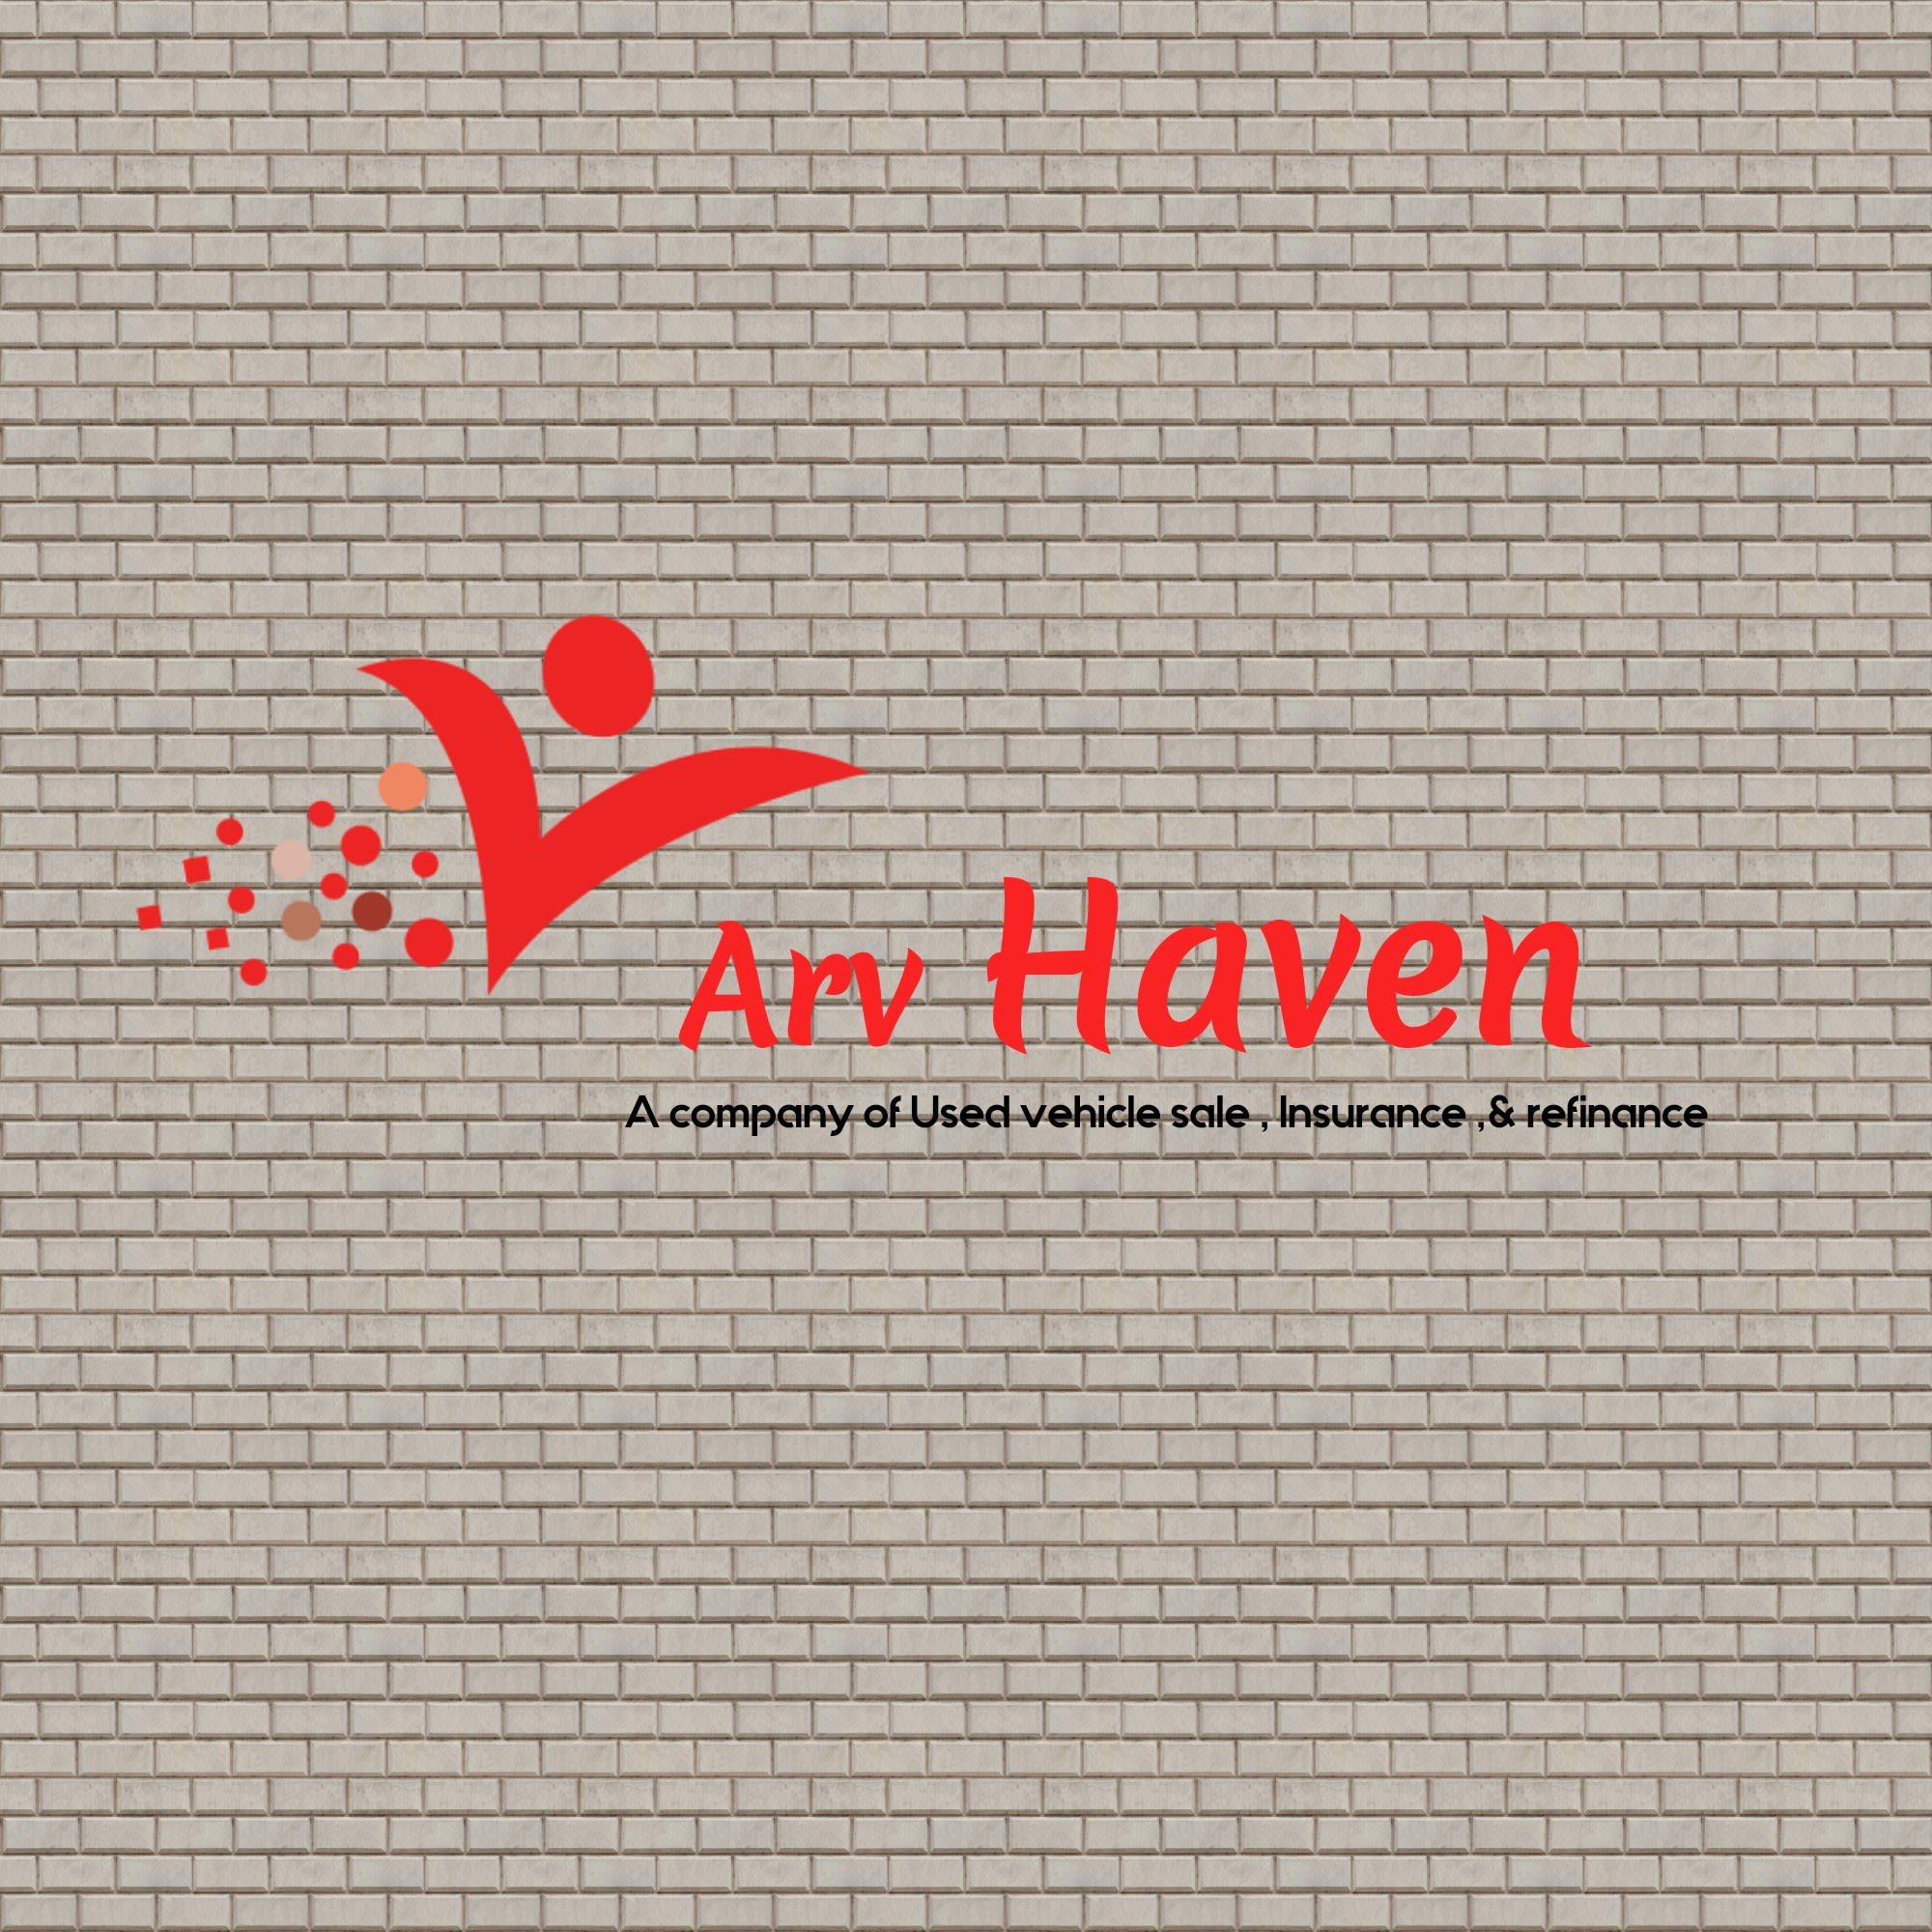 Arv Haven